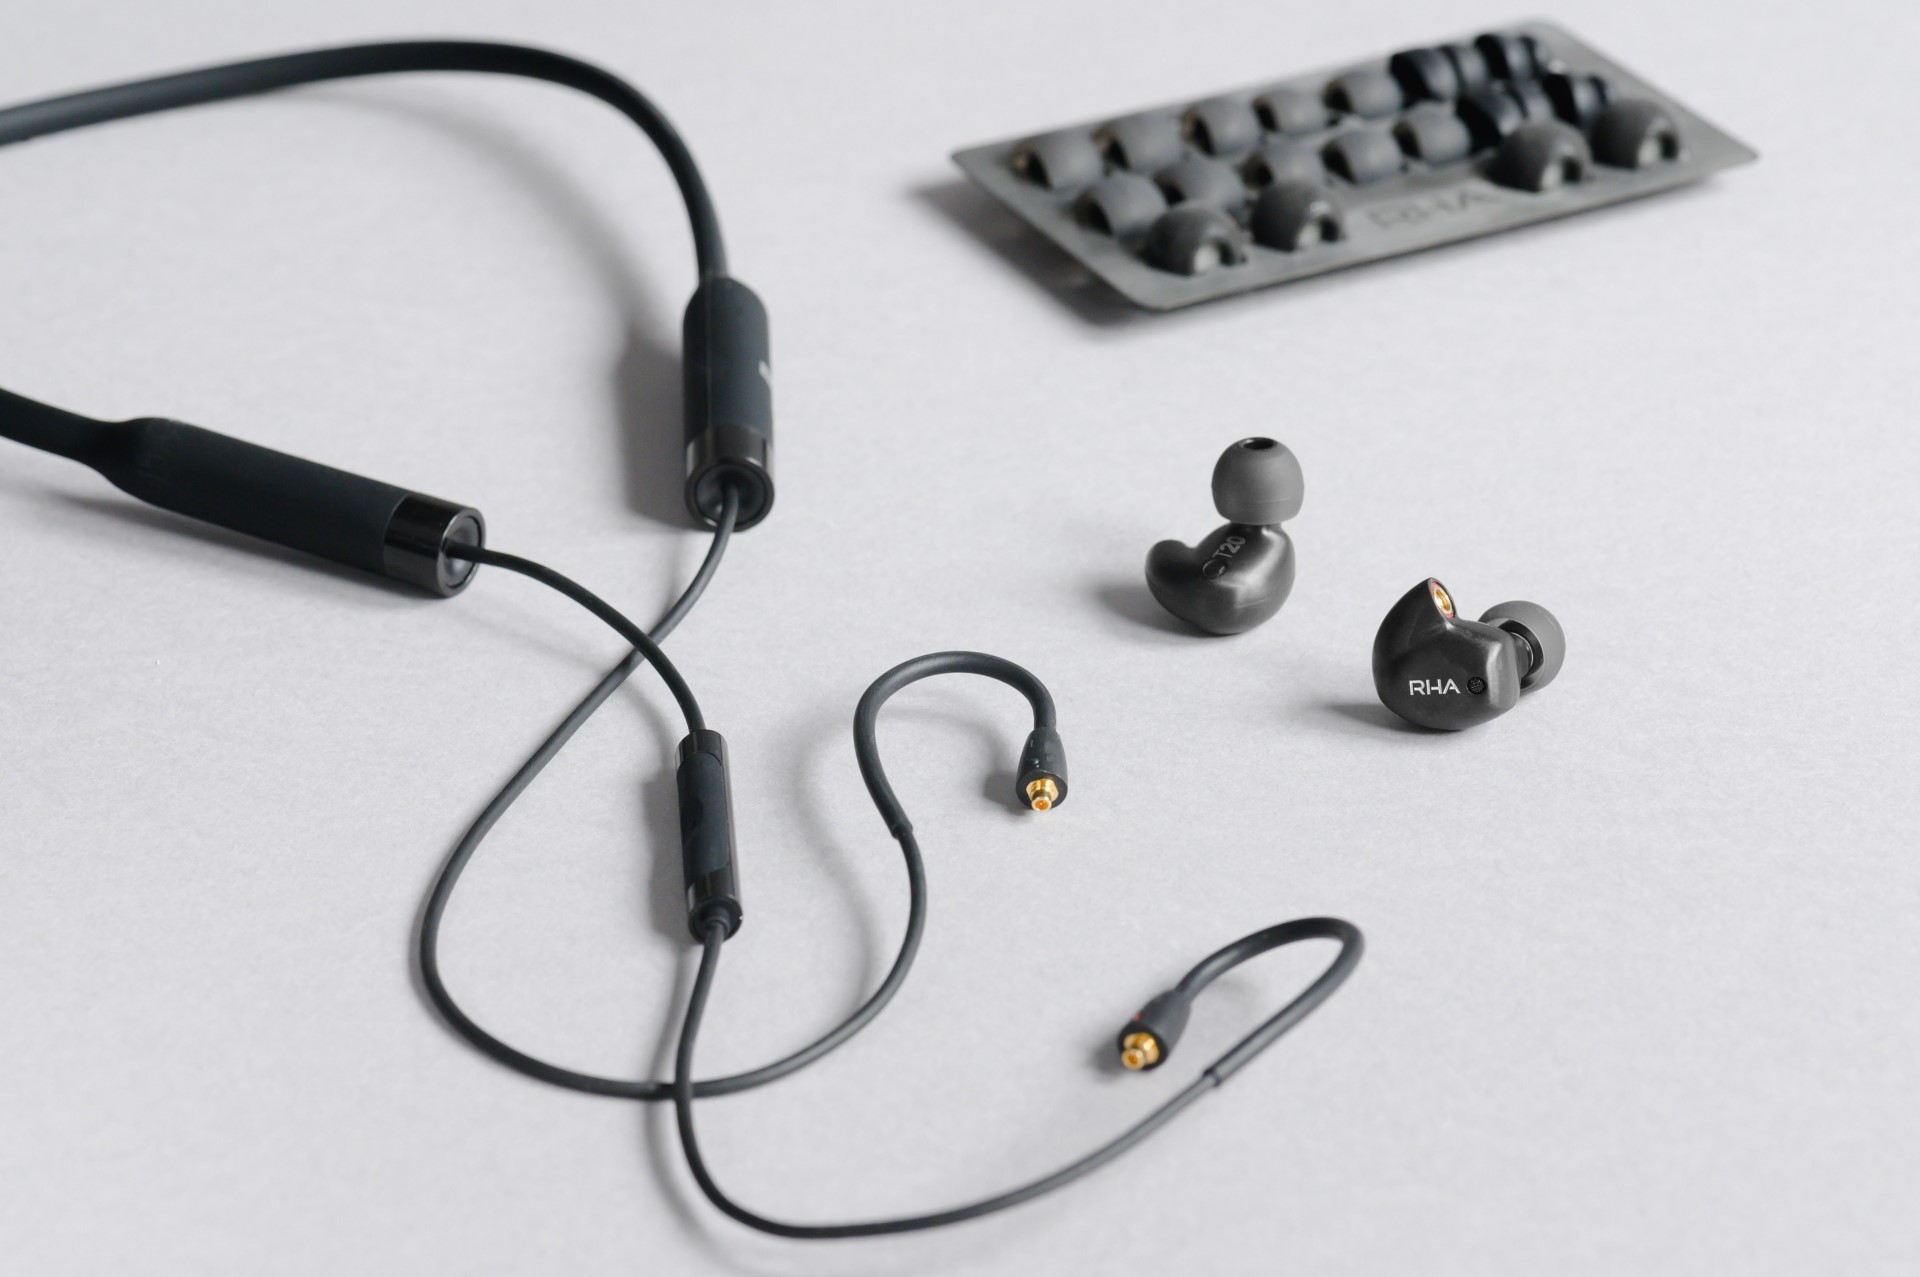 RHA Announces T20 Wireless Headphone - GameSpace.com